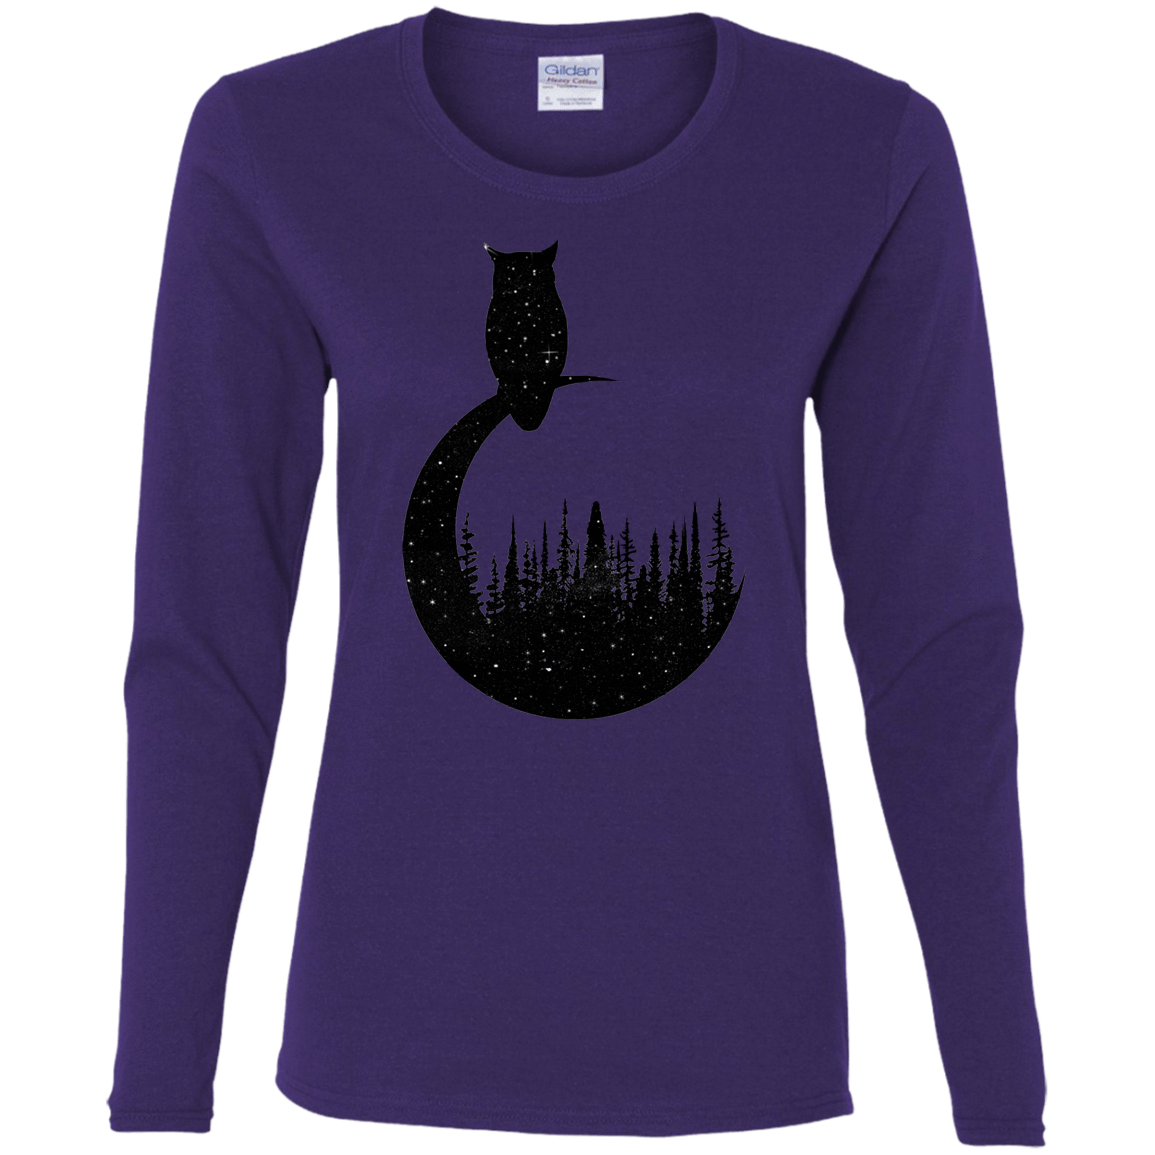 T-Shirts Purple / S Perched Owl Women's Long Sleeve T-Shirt